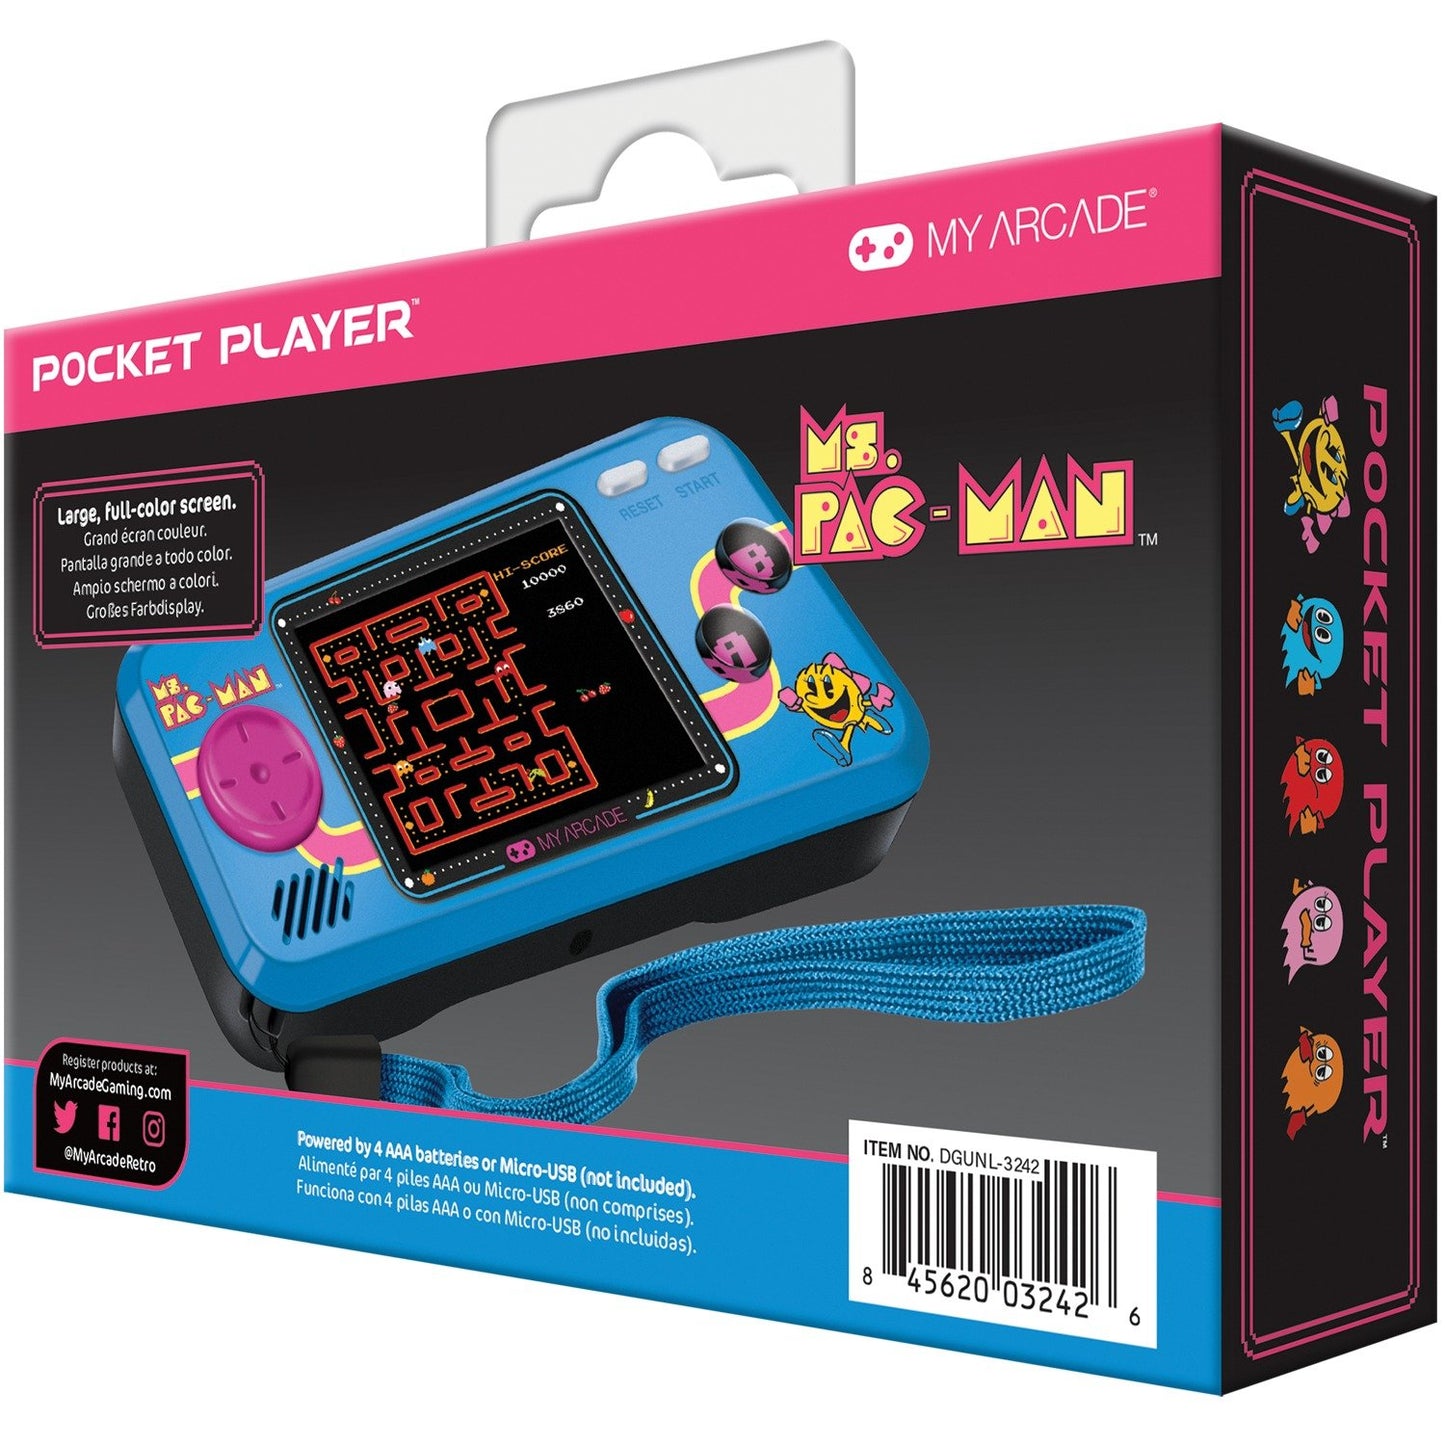 MY ARCADE DGUNL-3242 Ms Pac-Man Pocket Player (Blue)